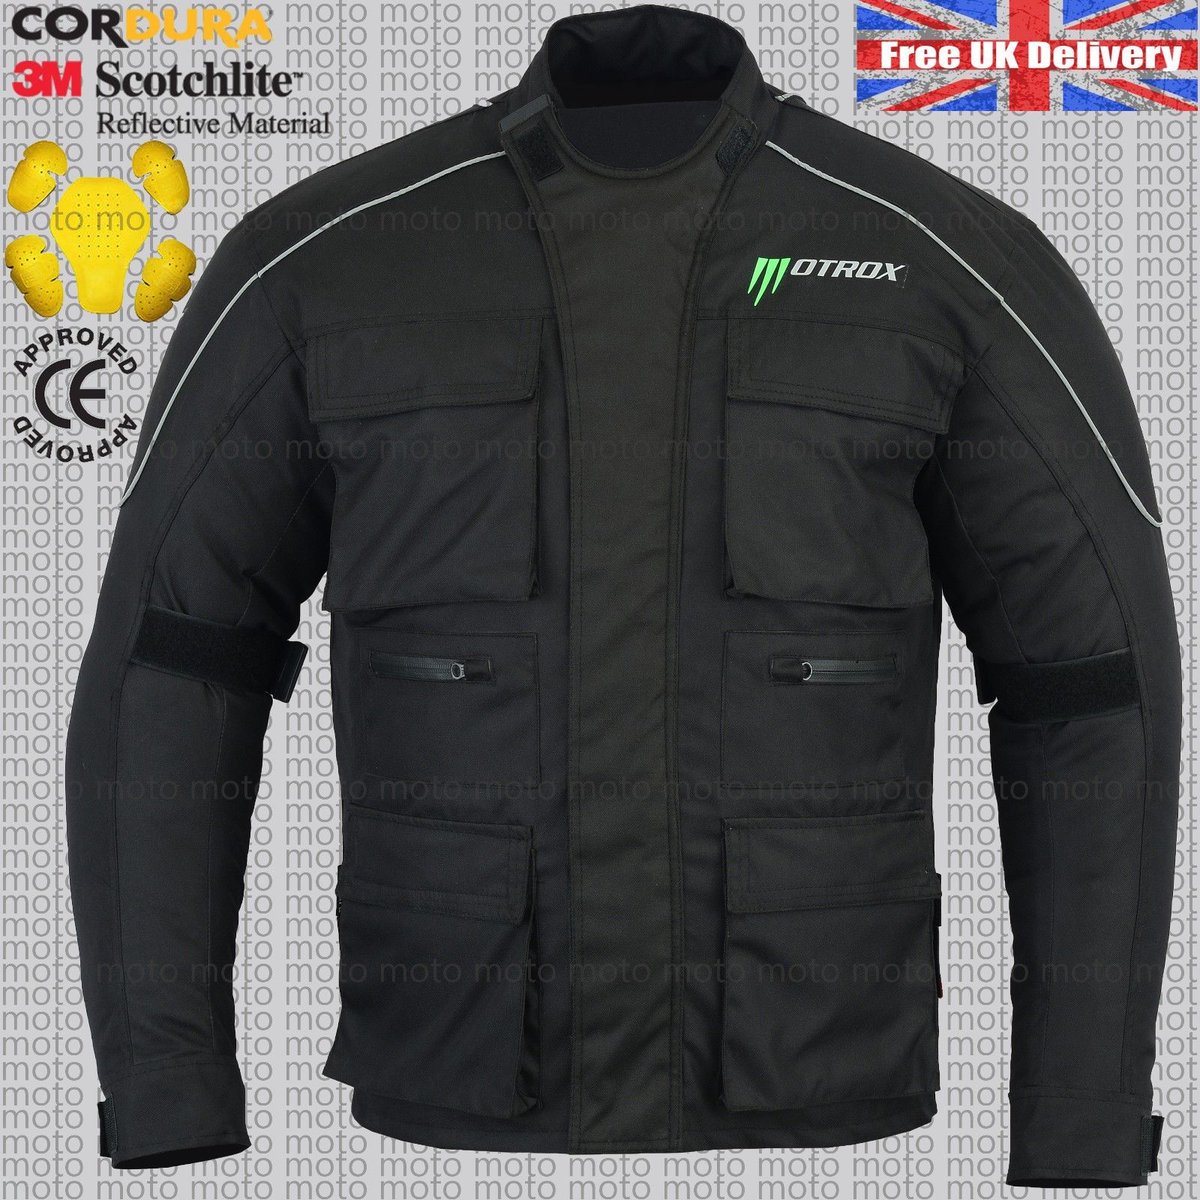 New Motorbike Motorcycle Waterproof Textile Men/'s Jacket Coat With CE Armoured